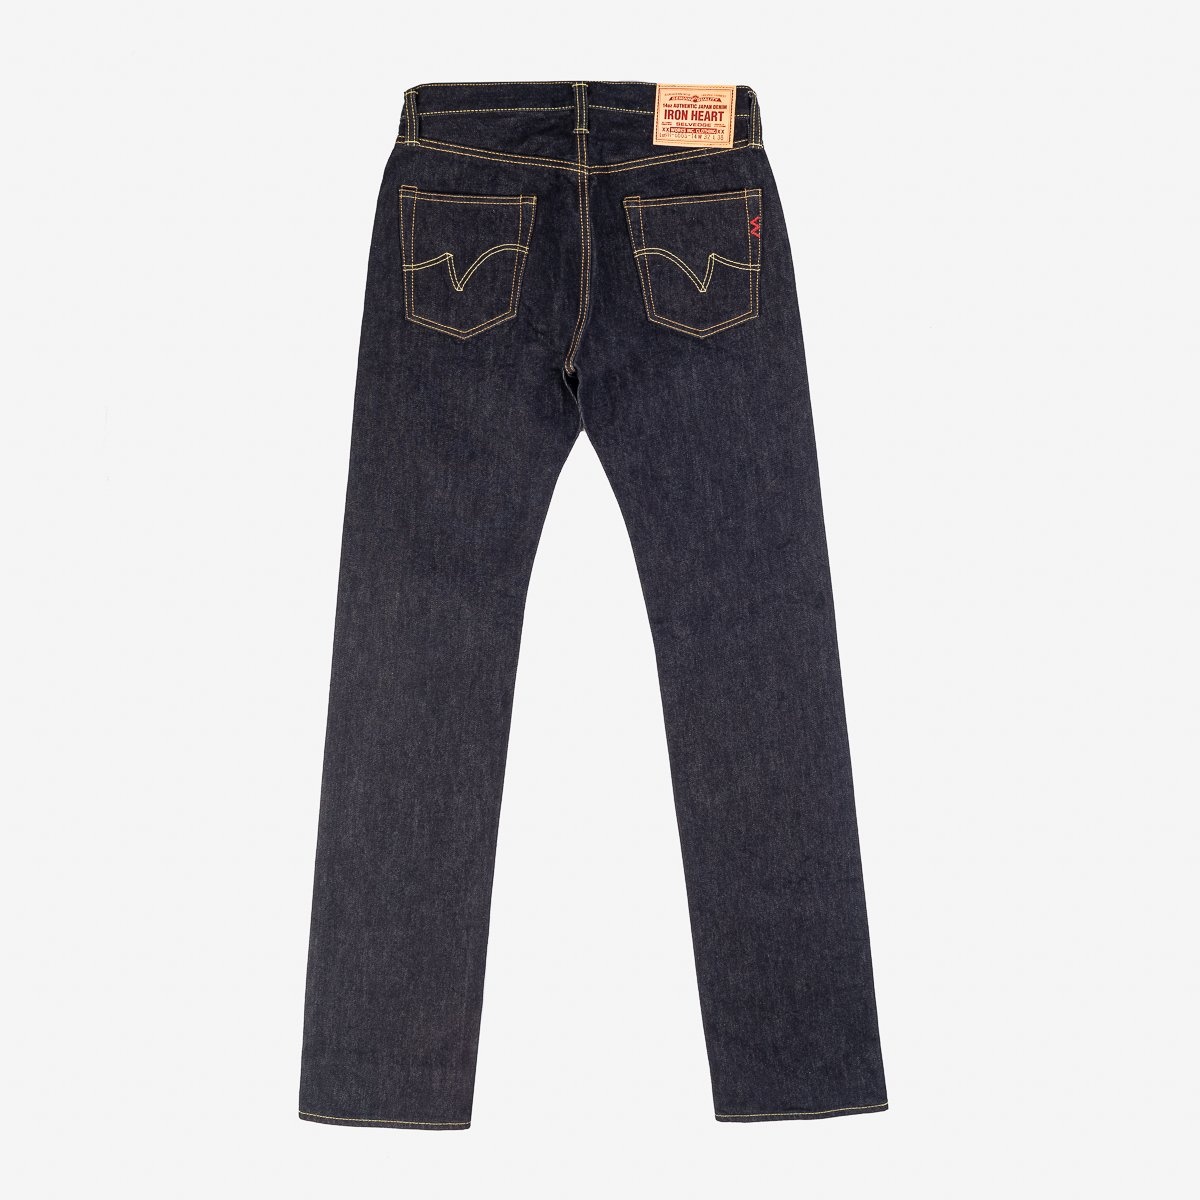 IH-666S-142 14oz Selvedge Denim Slim Straight Cut Jeans - Indigo - 5